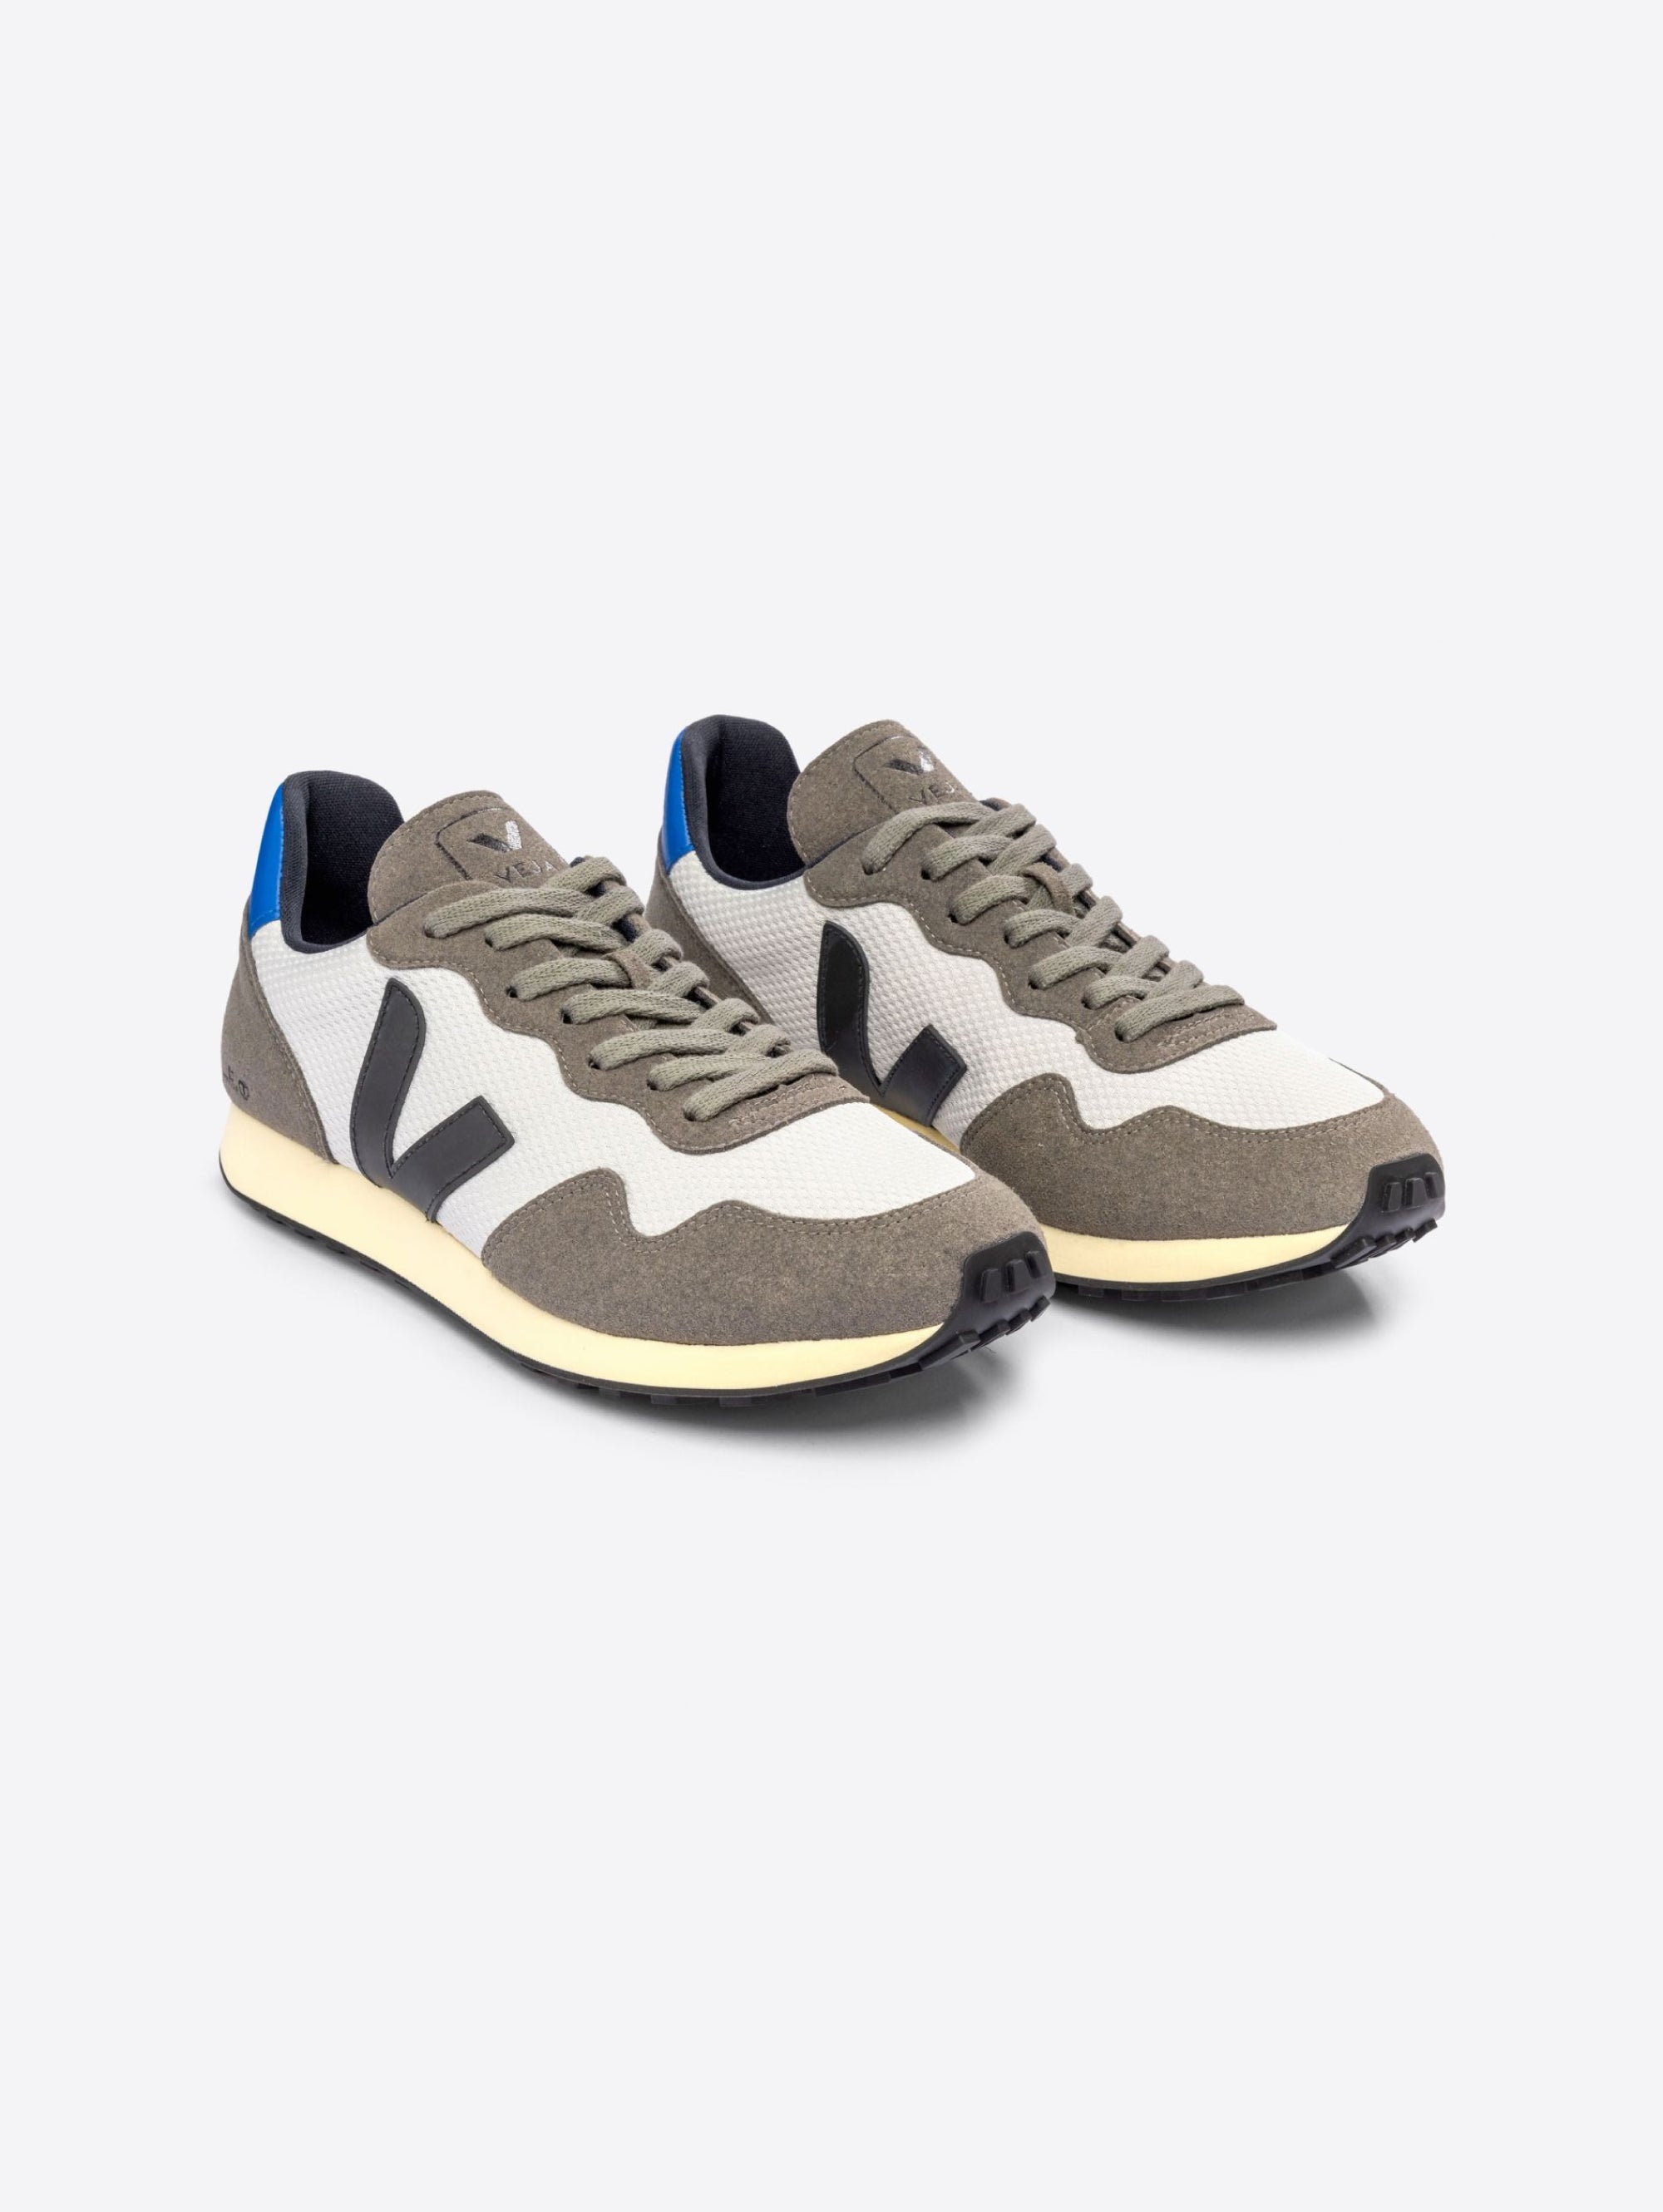 Sdu Grey/Black Retro Running Sneakers